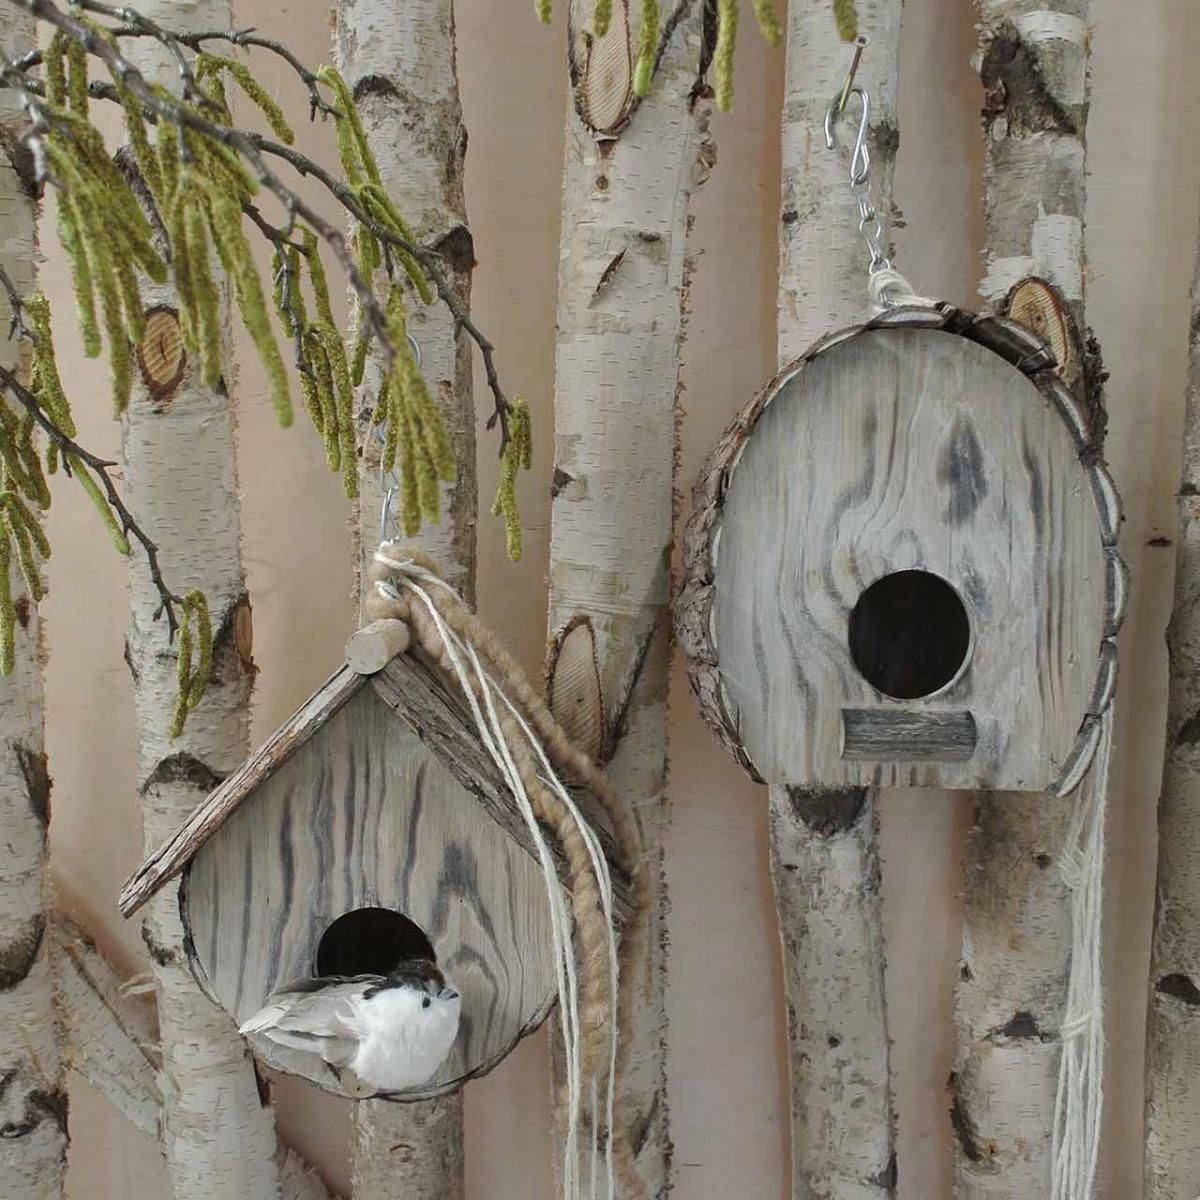 Decorative Nesting Box Bird House Wooden Garden Decor Natural White Washed H22cm W21cm